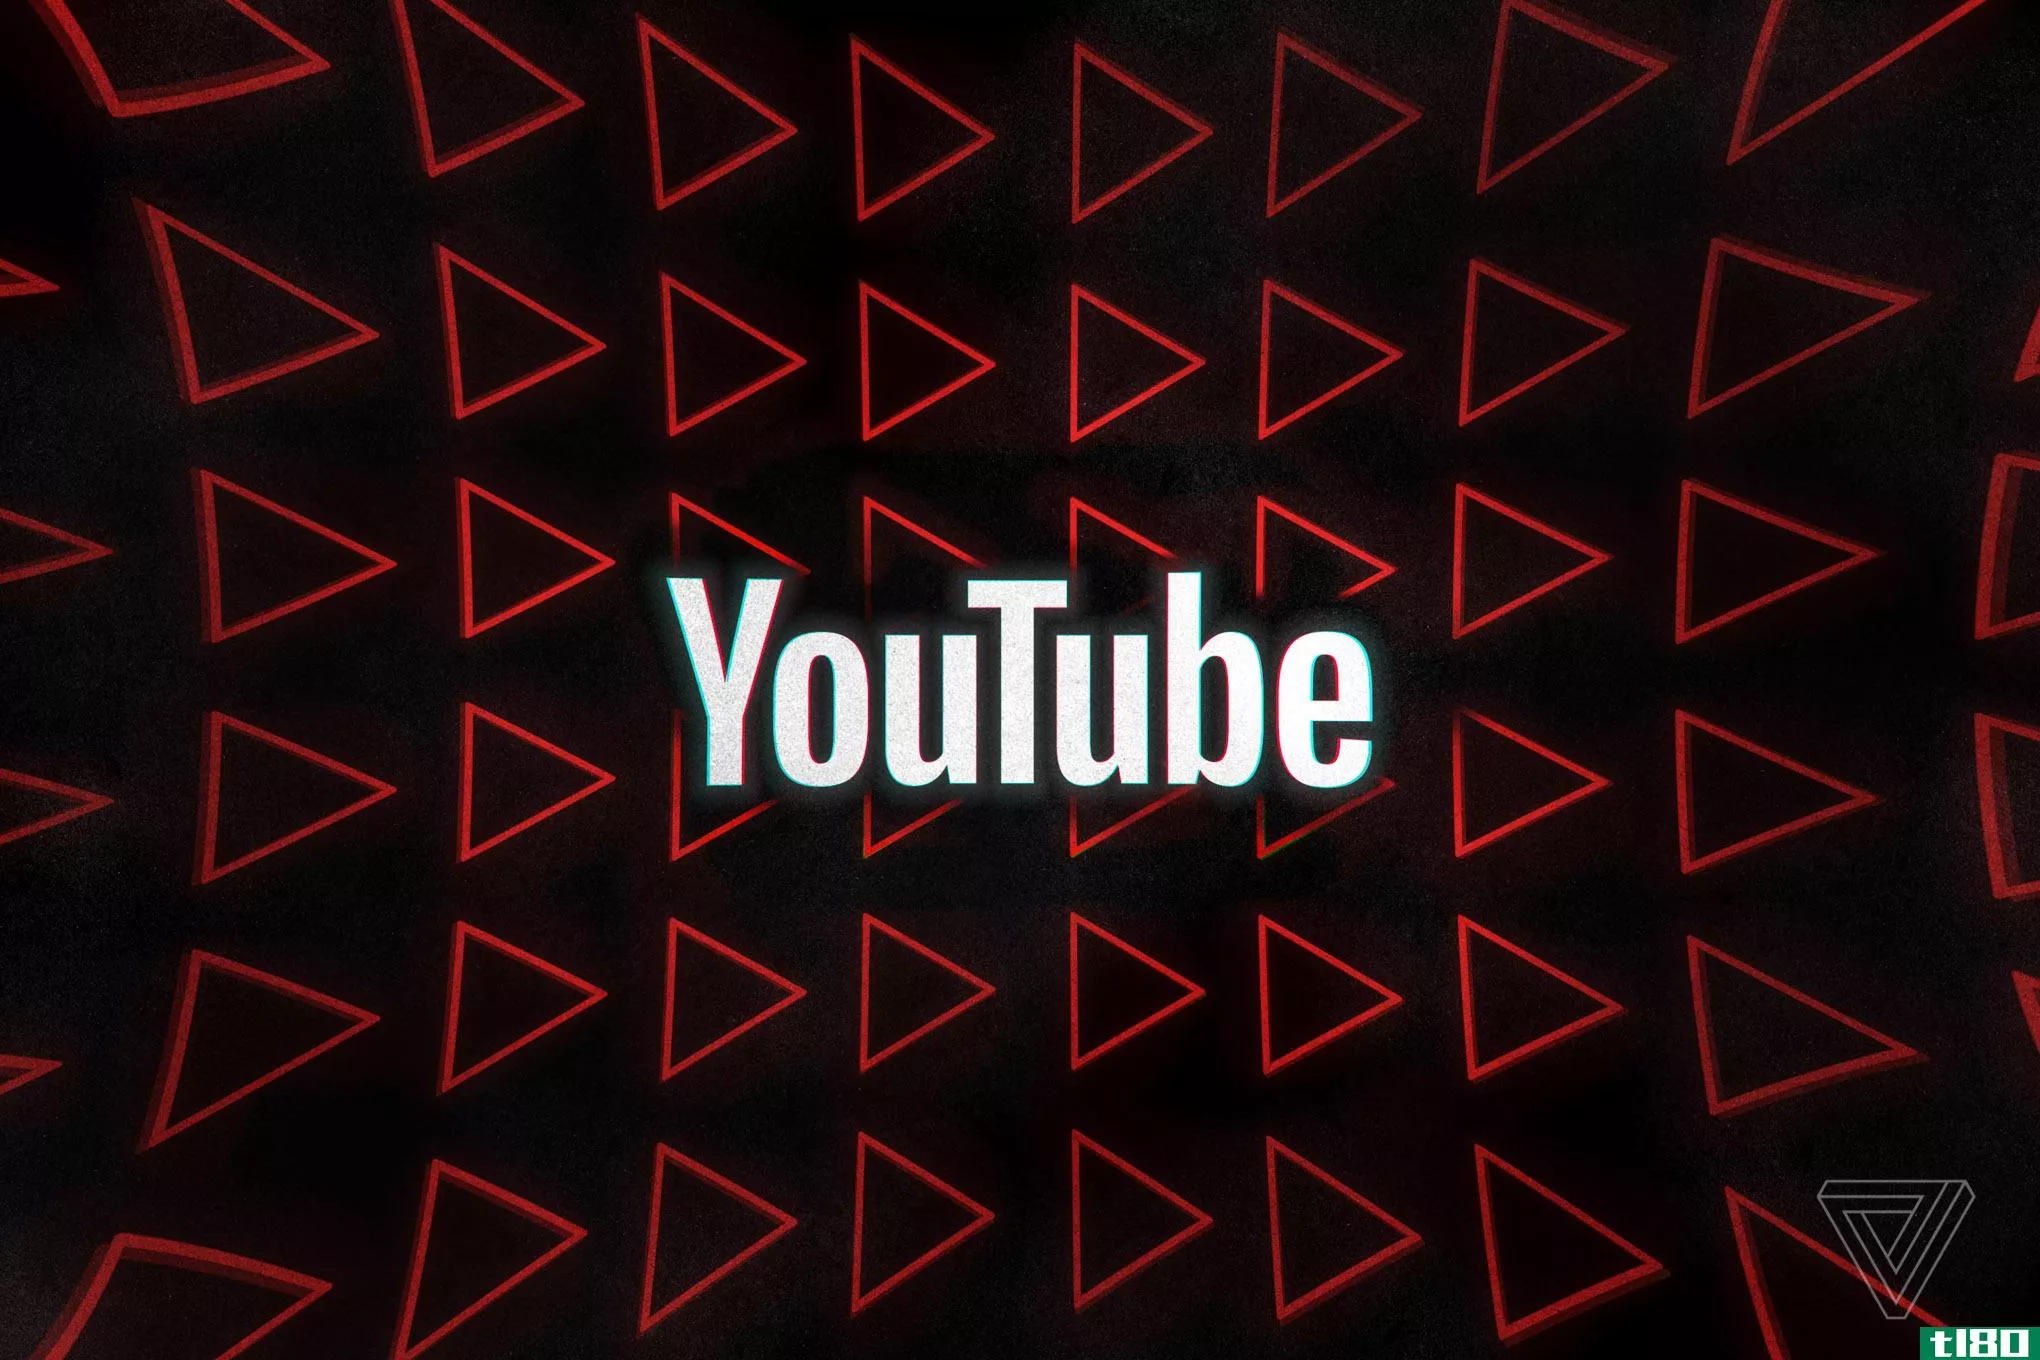 youtube禁止stefan molyneux，david duke，richard spencer，以及更多仇恨言论